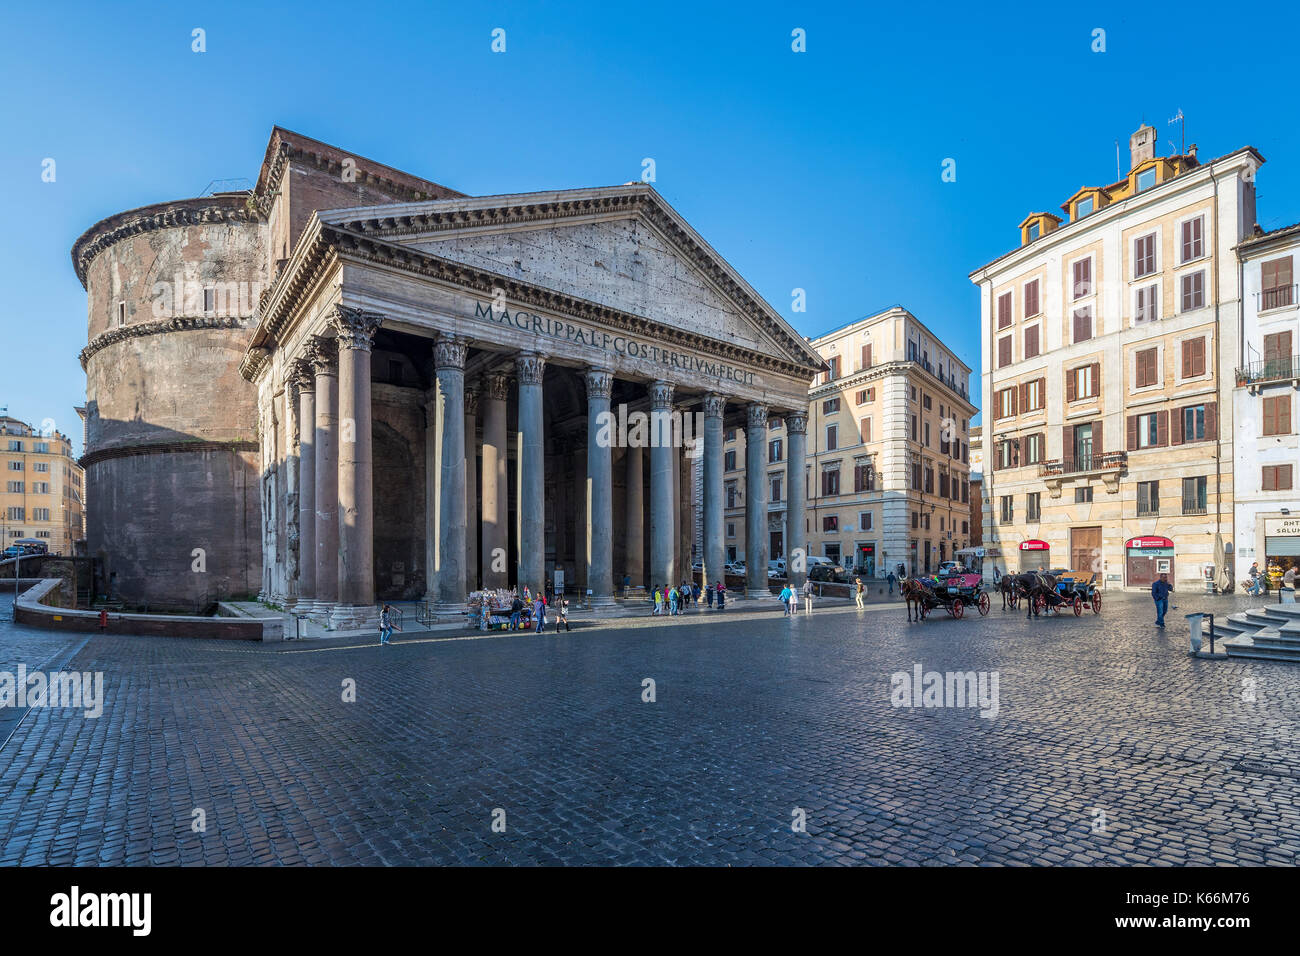 The Pantheon at Piazza della Rotonda, Rome, Italy, Europe. Stock Photo